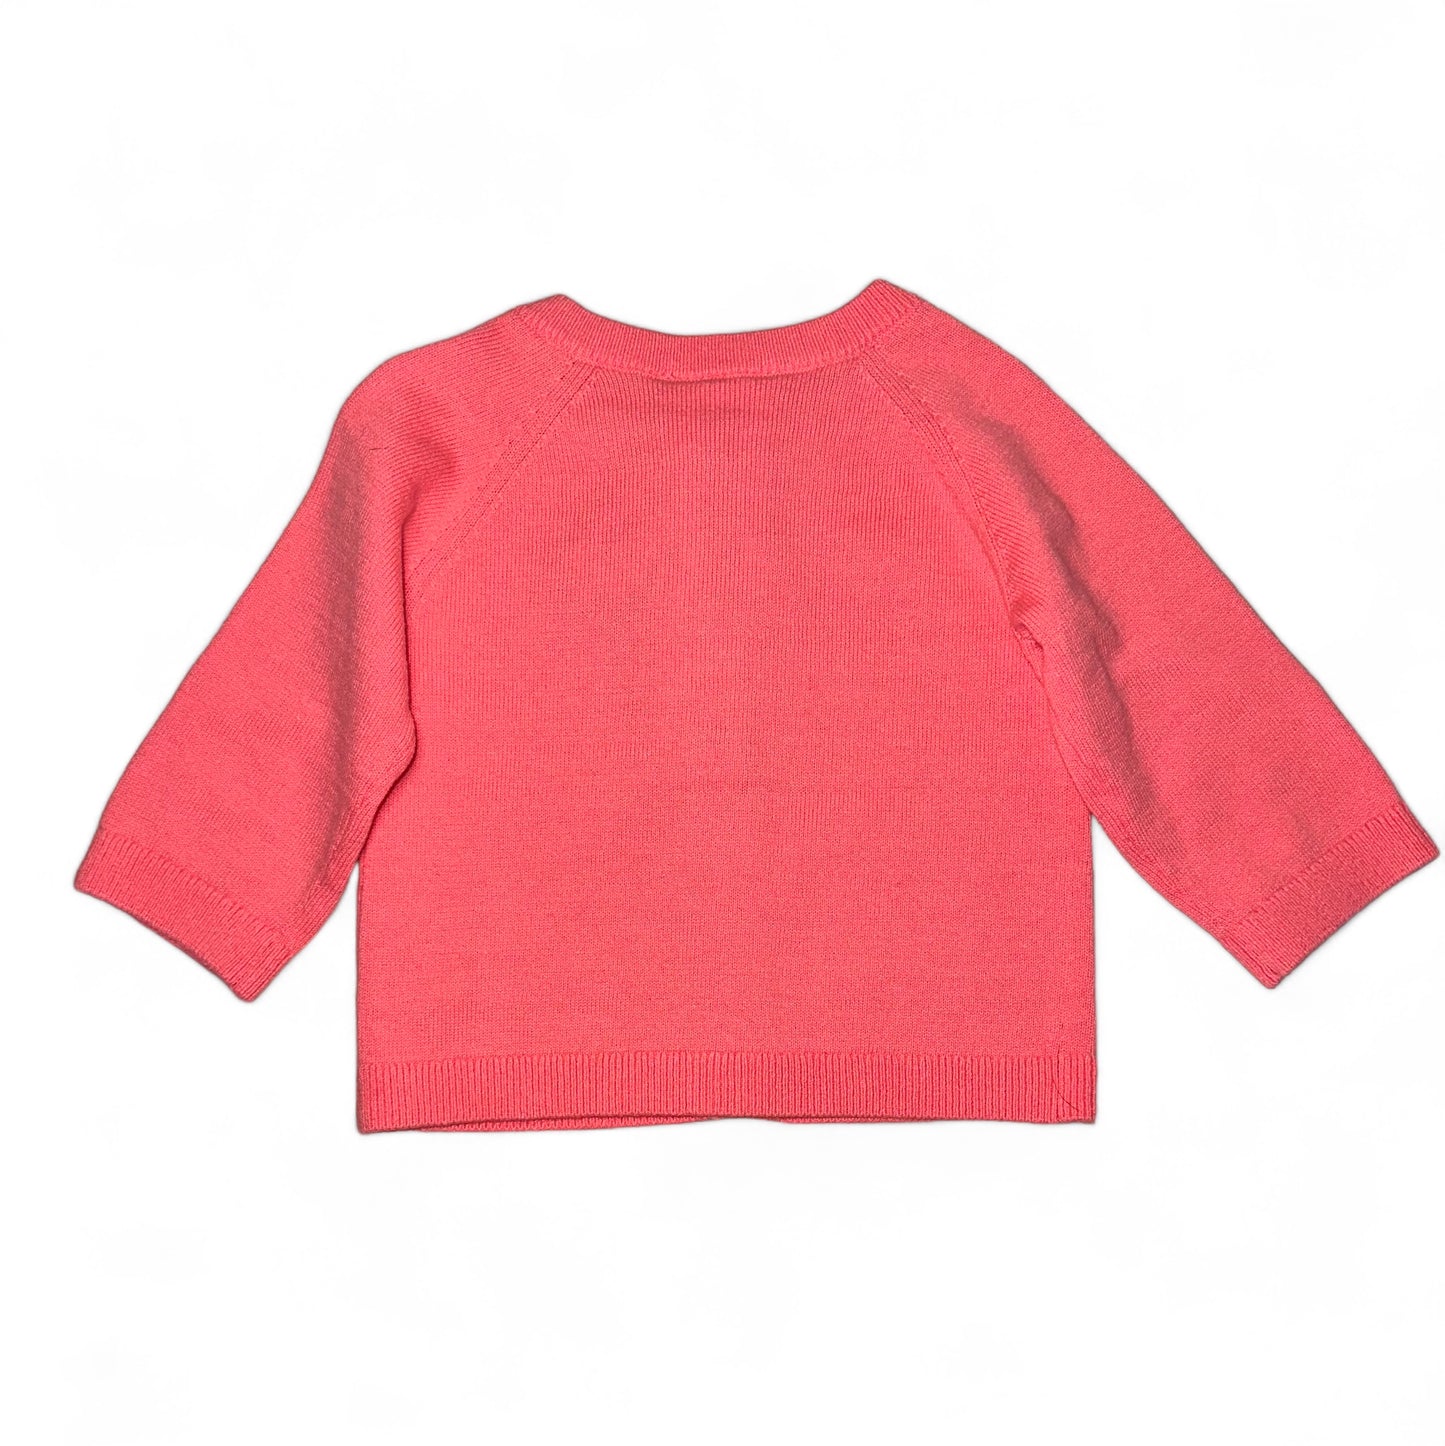 Jacadi Pink Cardigan Sweater